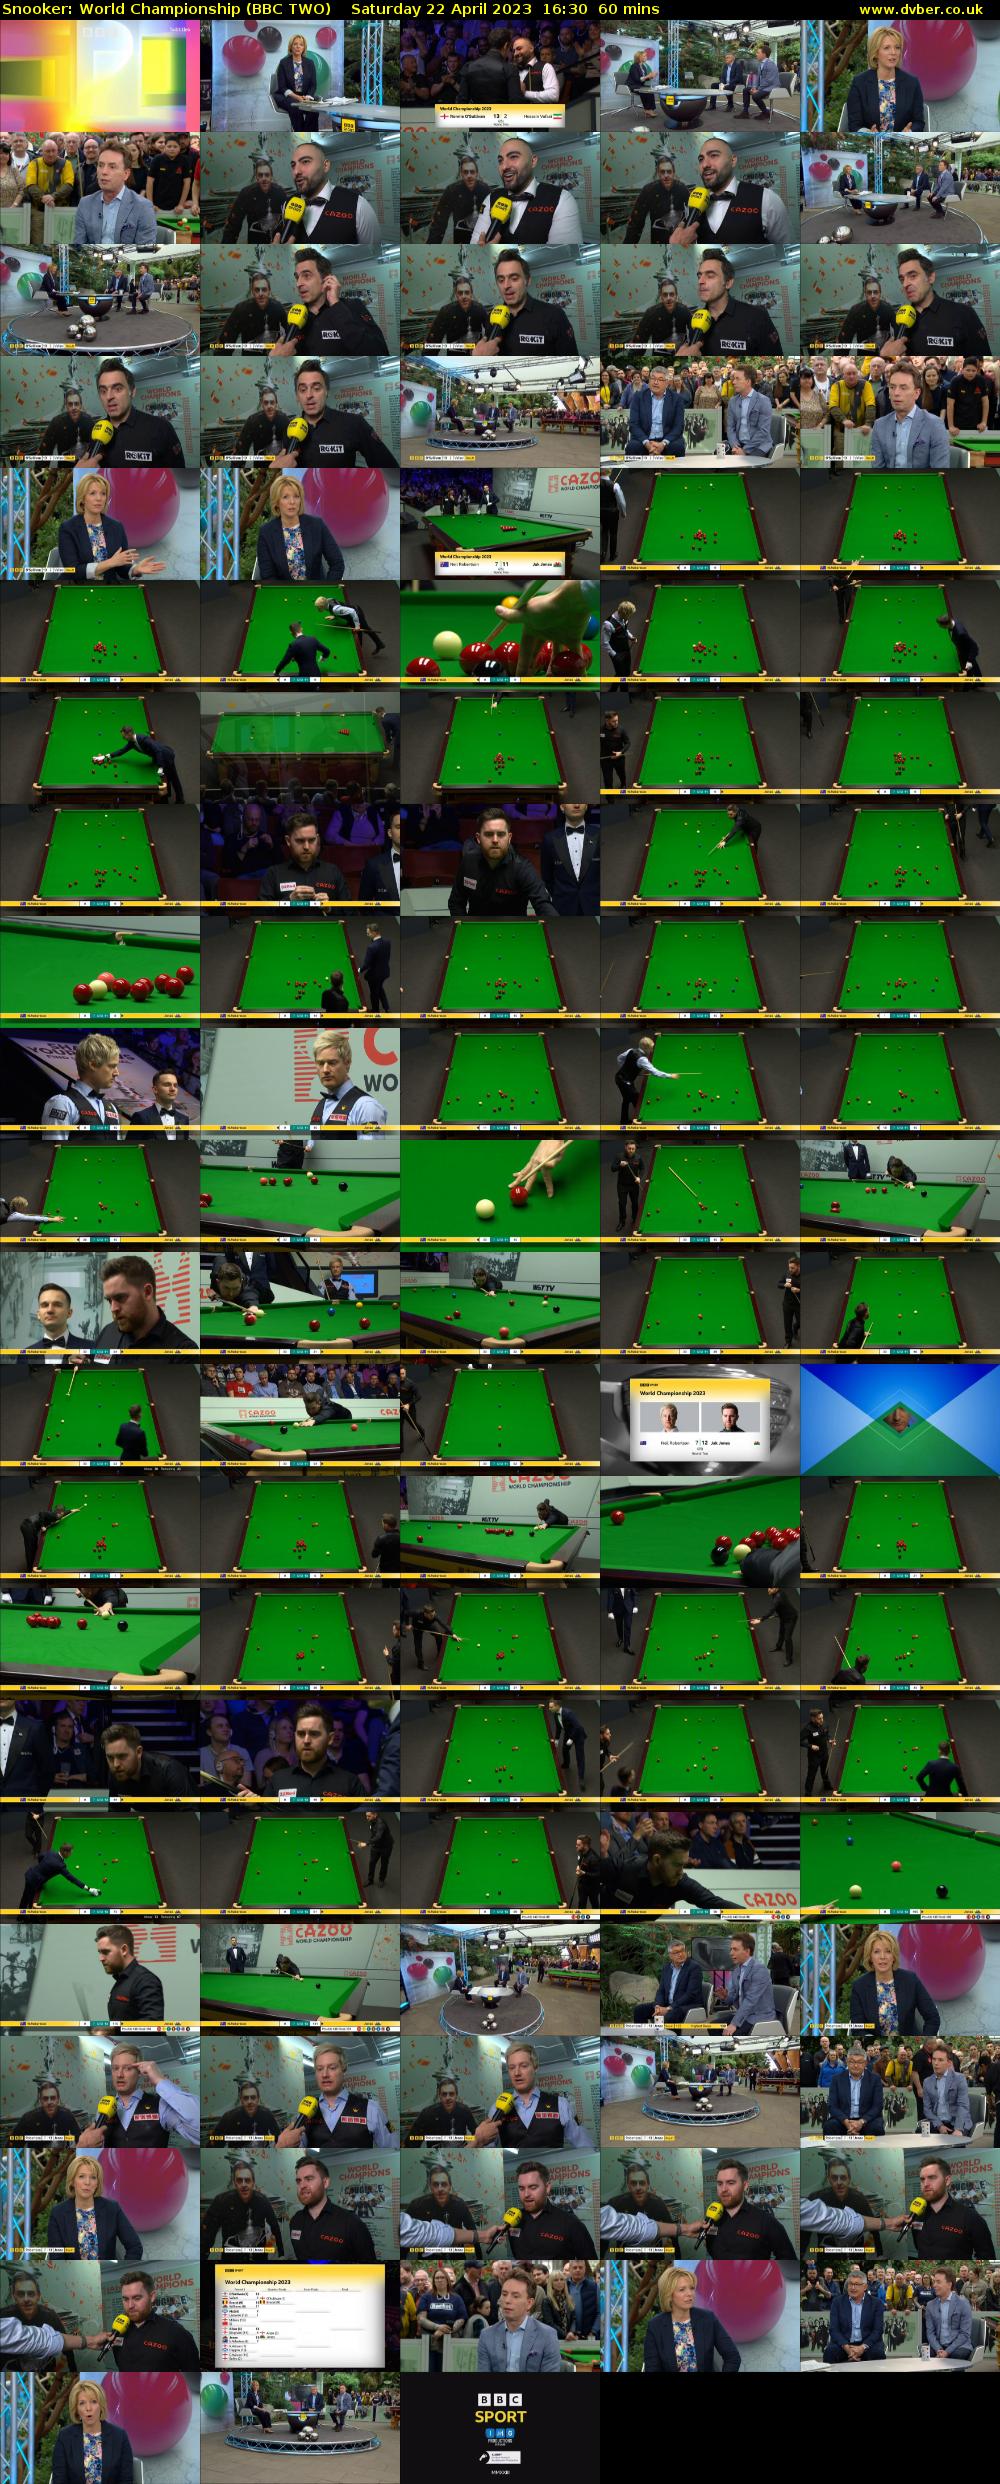 Snooker: World Championship (BBC TWO) Saturday 22 April 2023 16:30 - 17:30